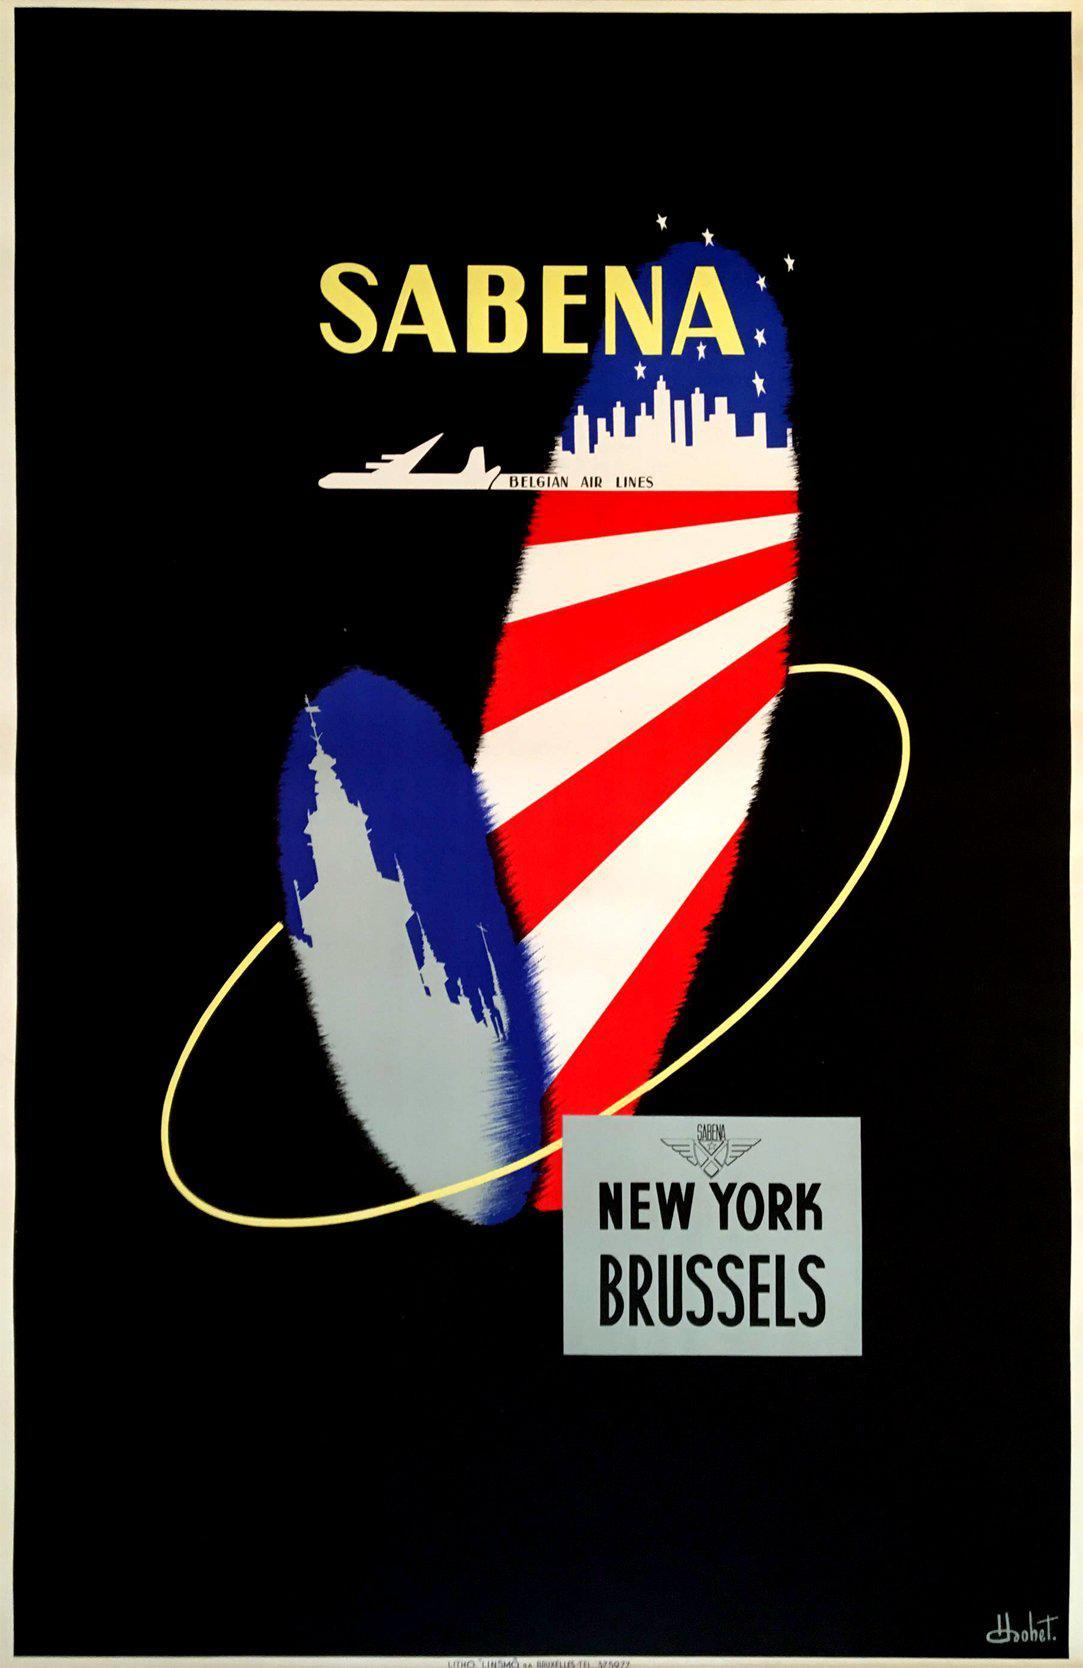 Original Vintage Sabena Travel Poster New York to Brussels Belgium by Hohet c1950